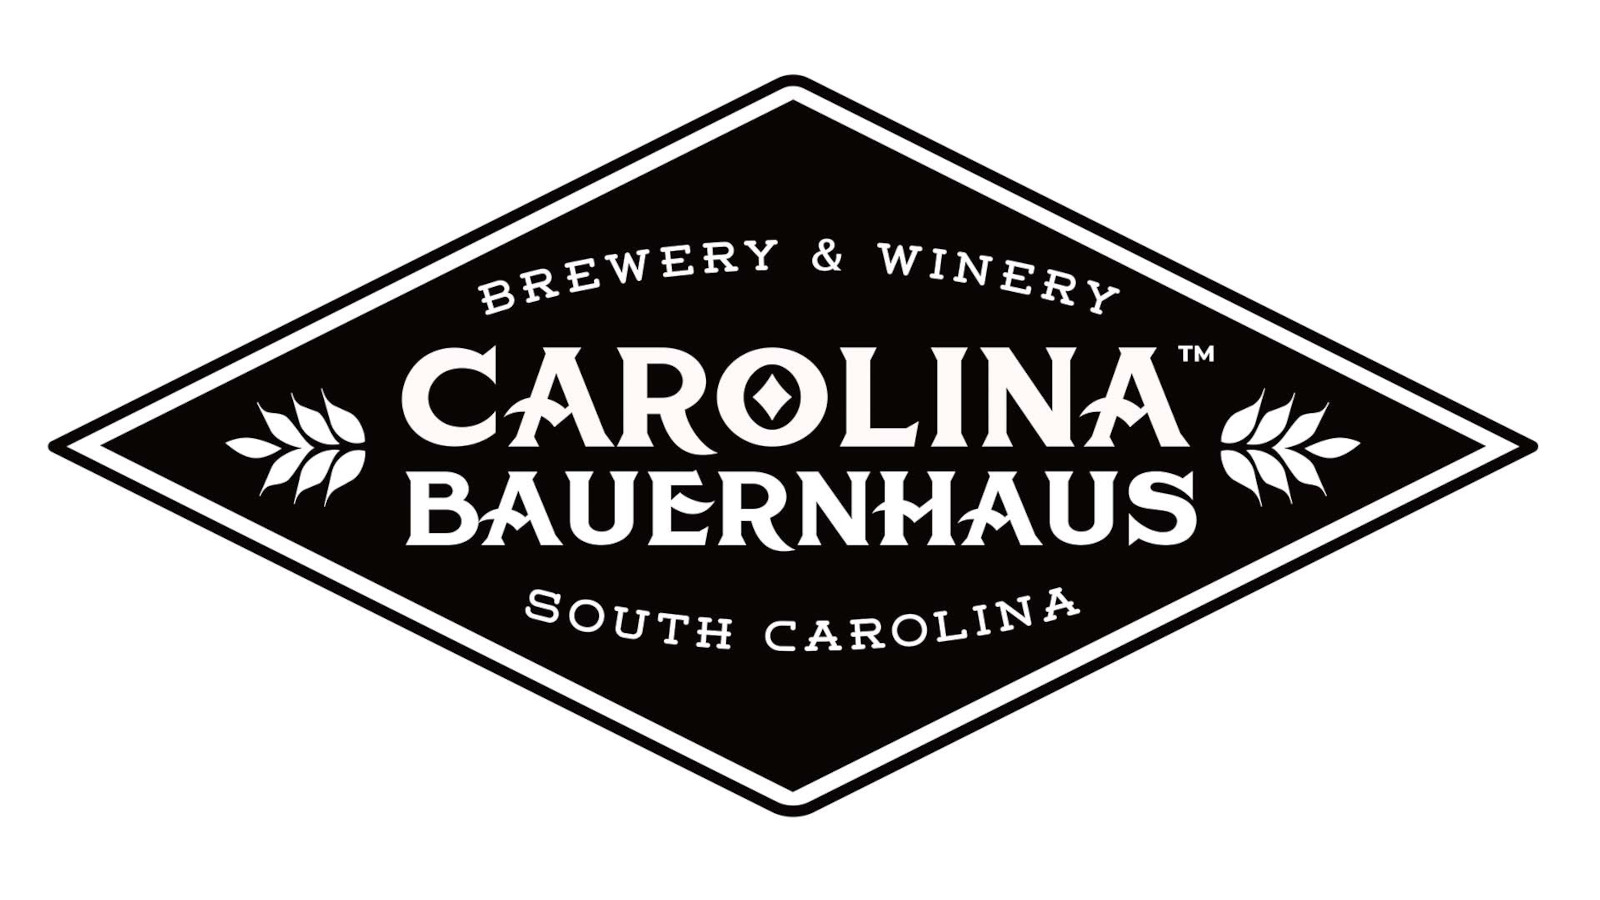 Carolina Bauernhaus Brewery & Winery $100 Gift Card US 56.5 $